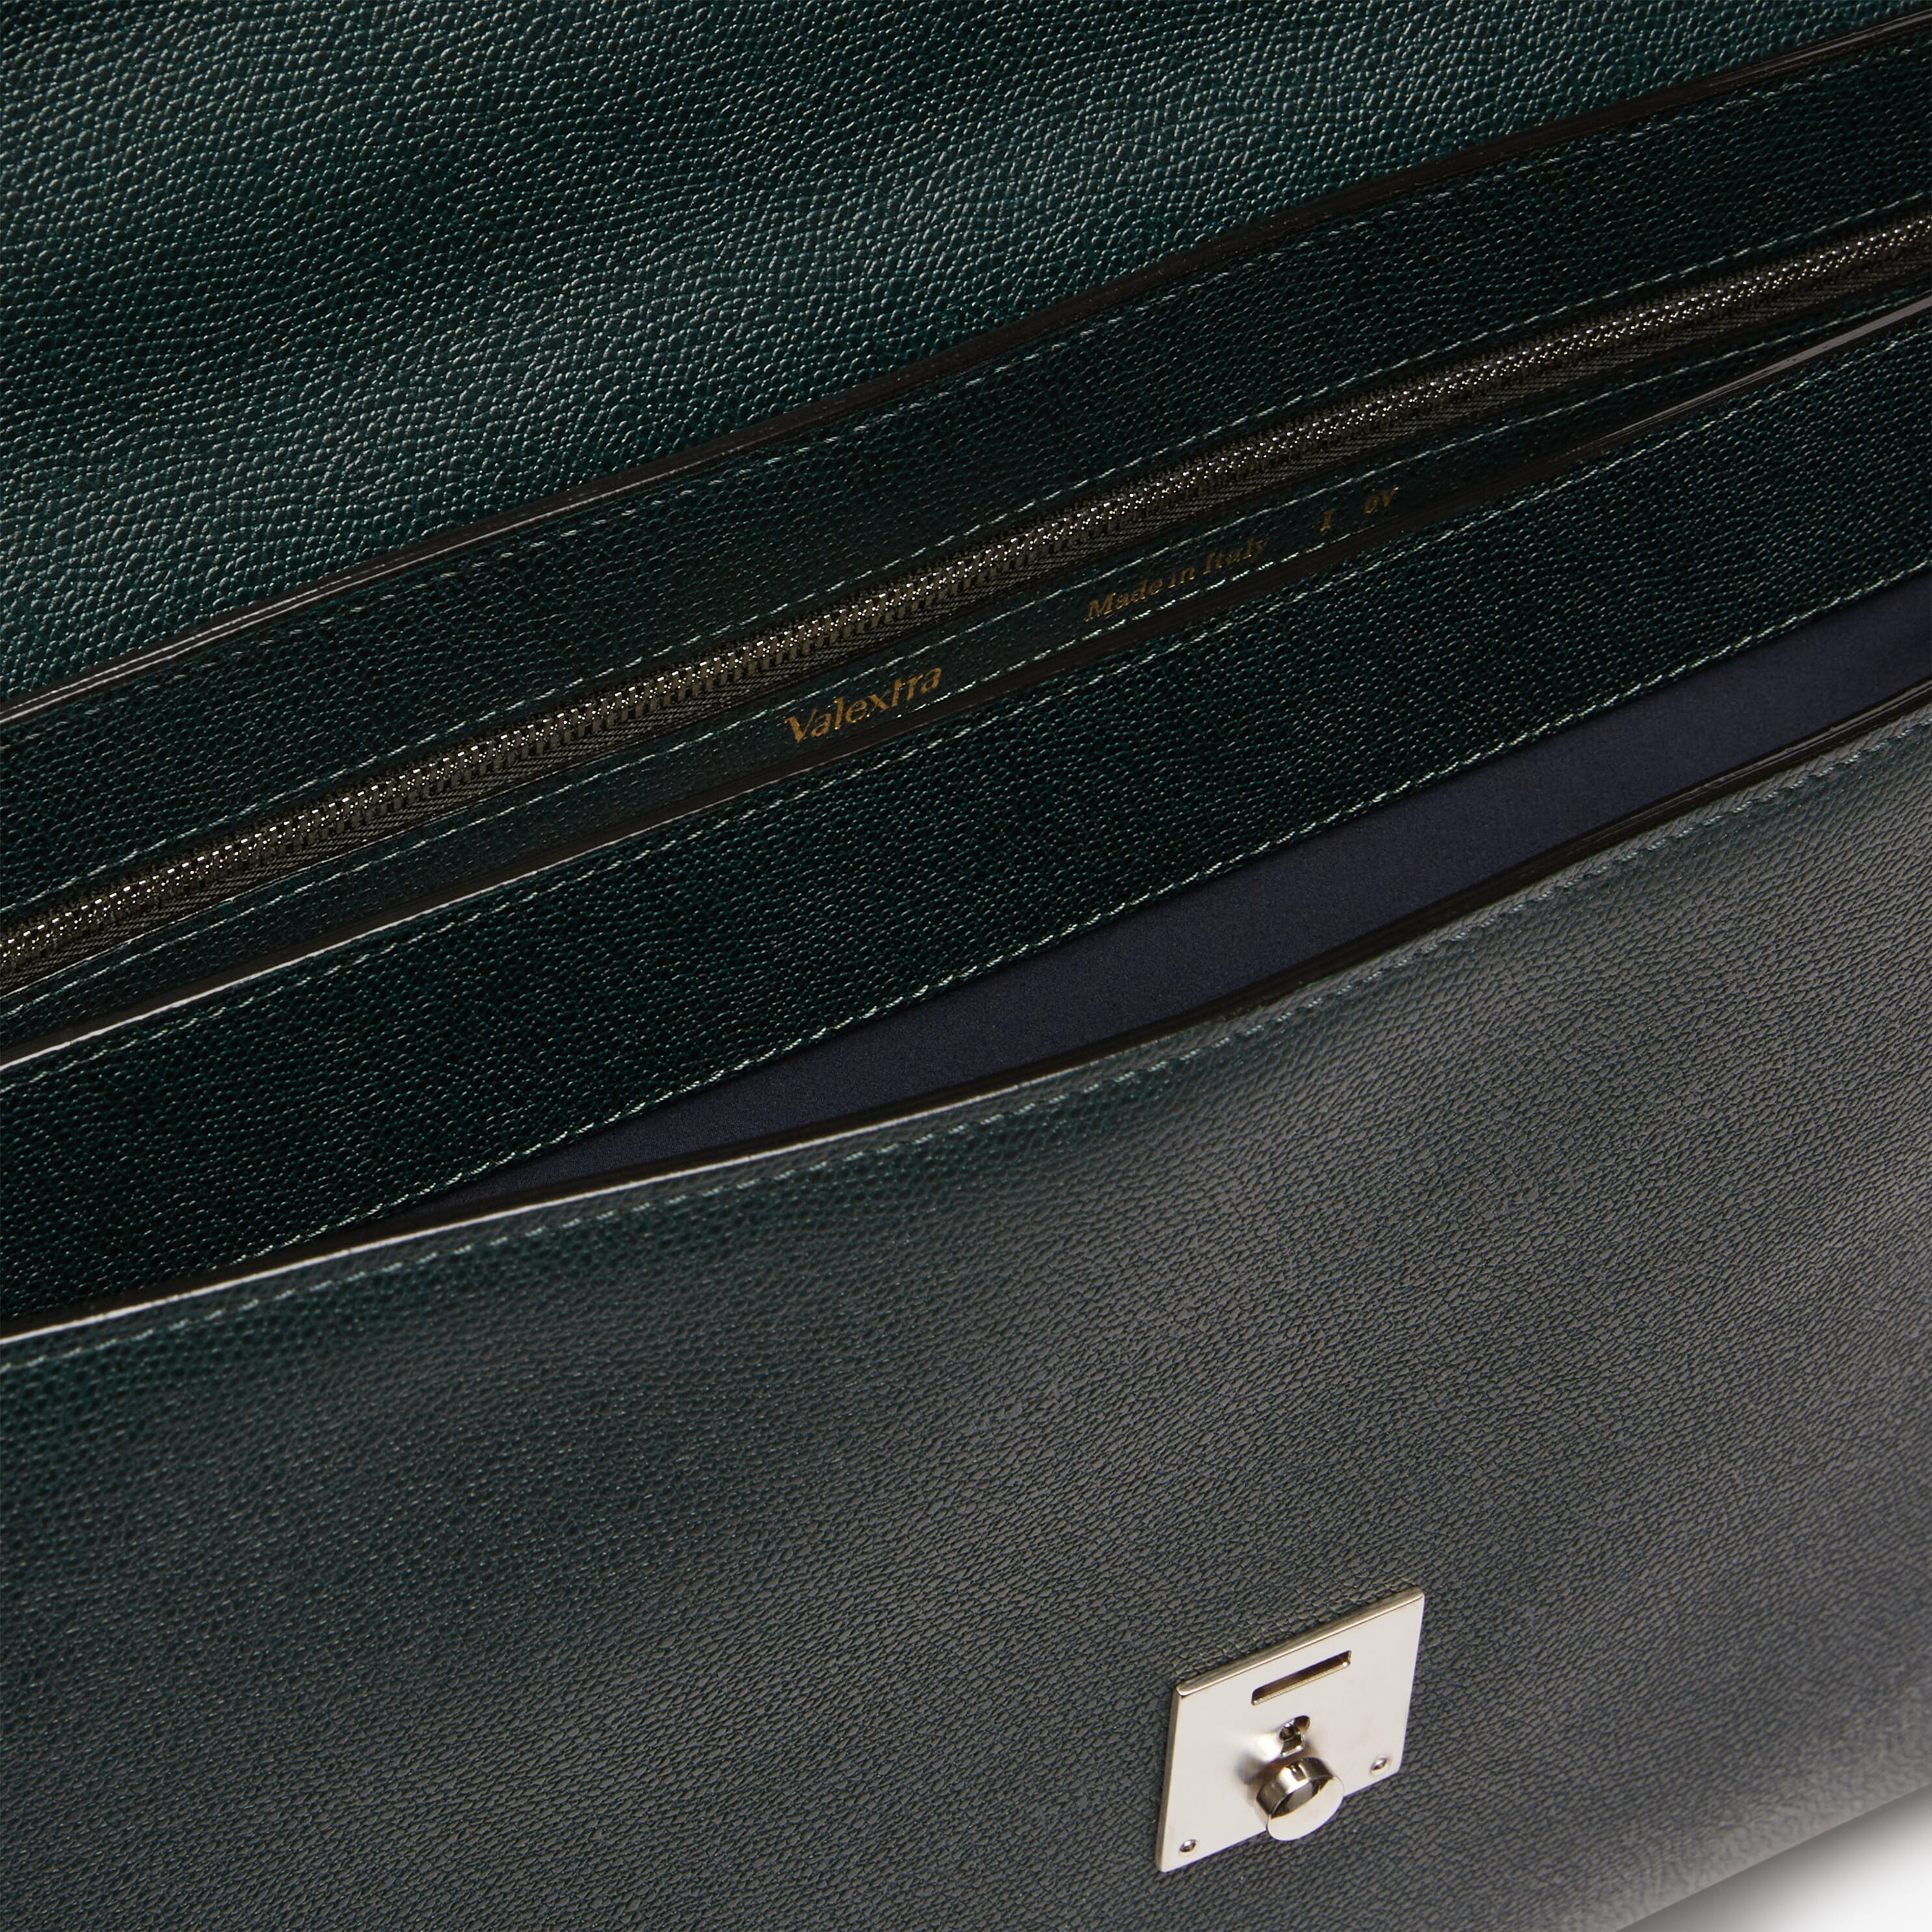 Avietta Briefcase with Flap 24h - Valextra Green - Vitello VS - Valextra - 2